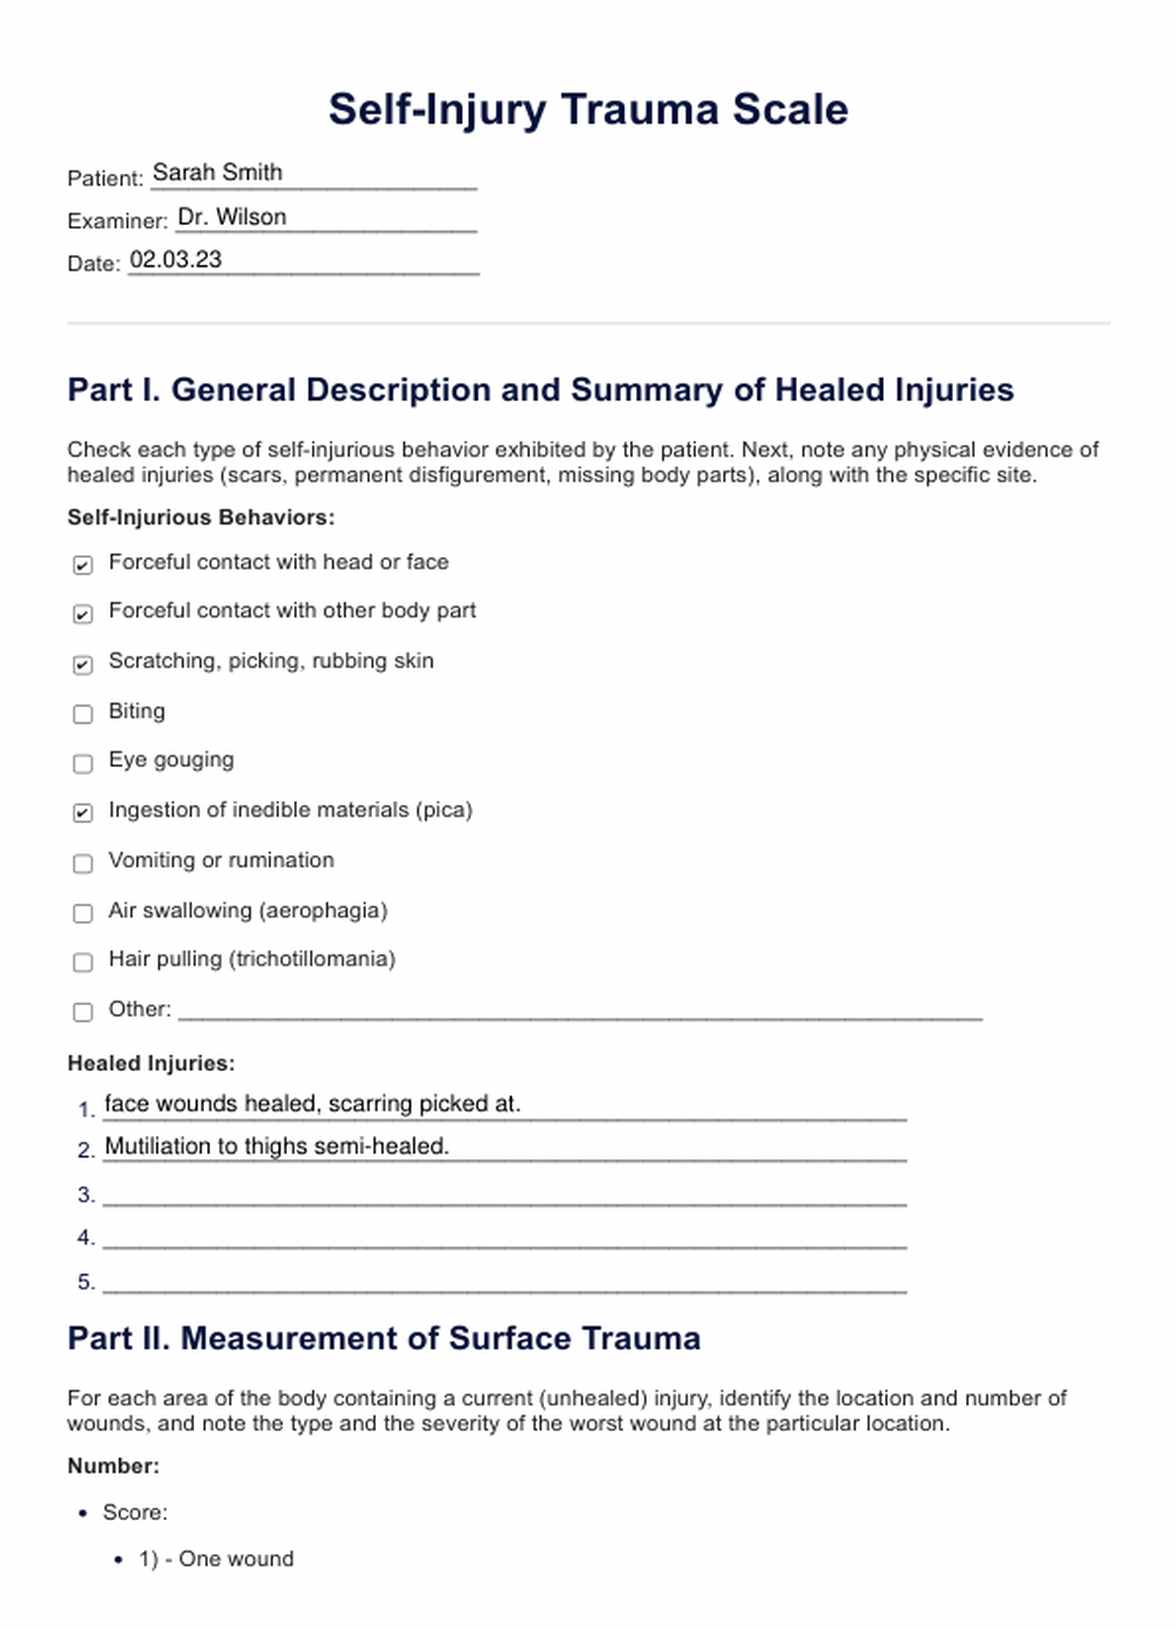 Self Injury Trauma Scale PDF Example